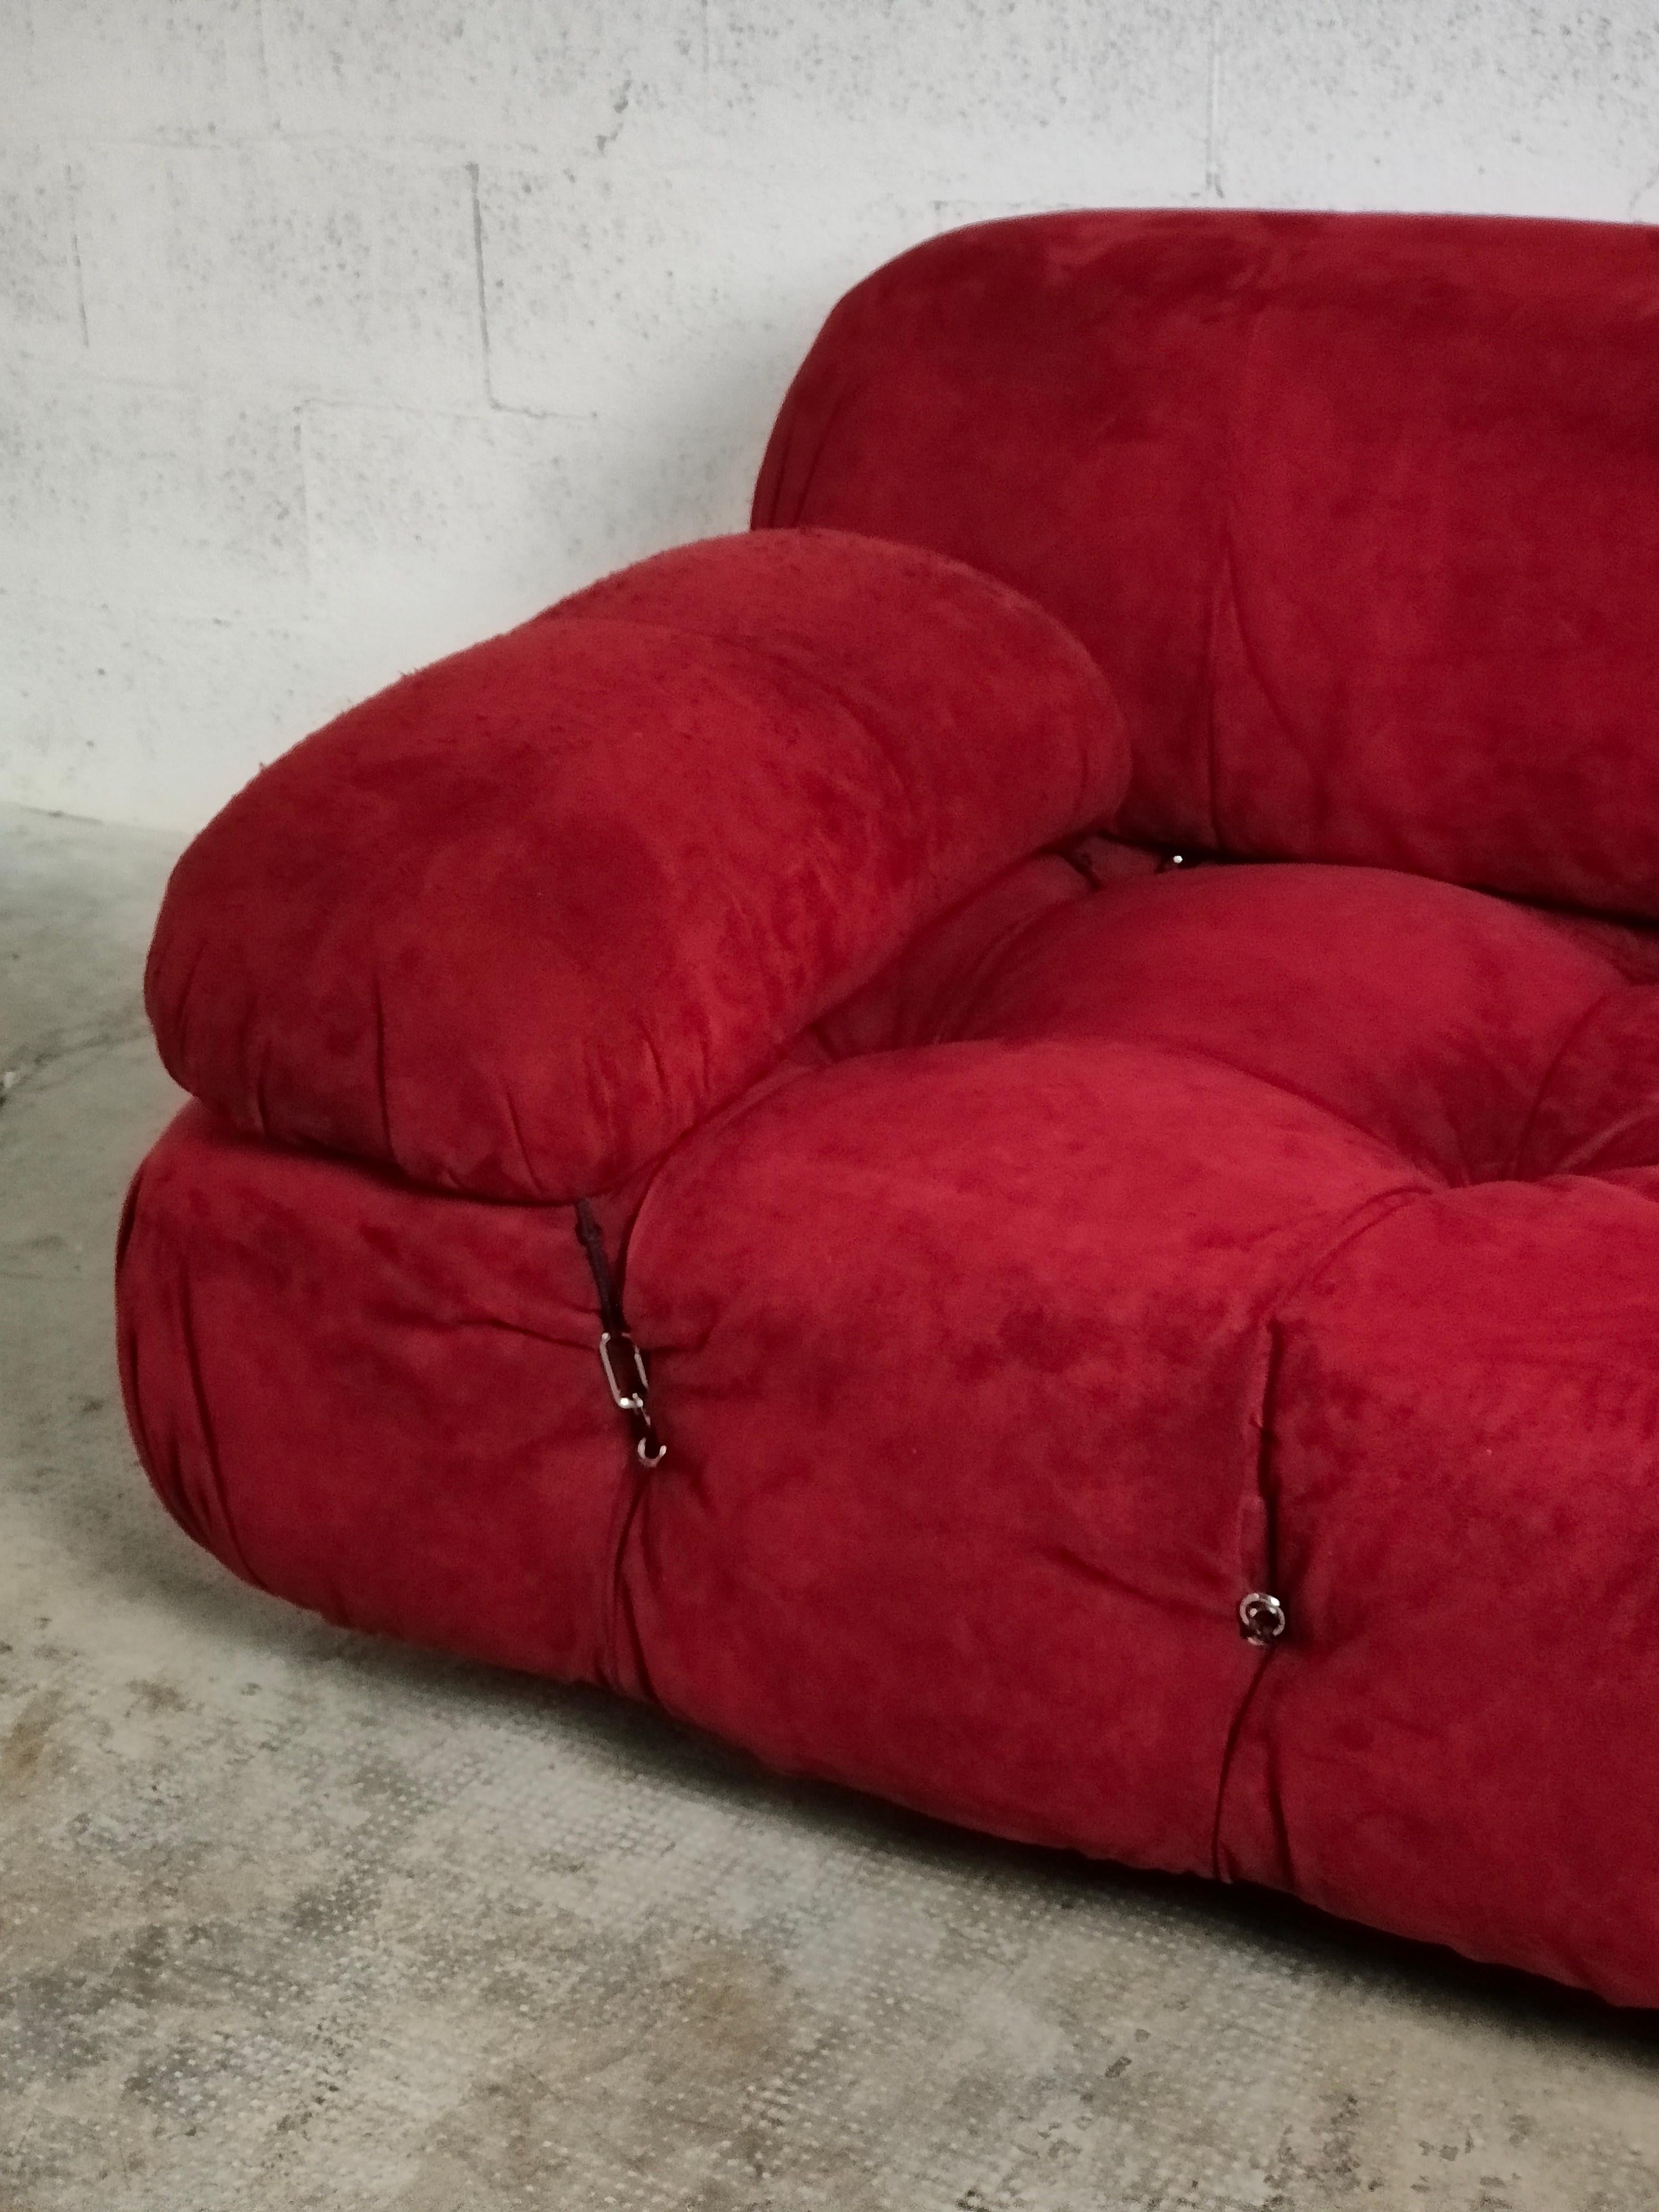 Fabric Camaleonda Red Sofa by Mario Bellini for B&B Italia, 1970s